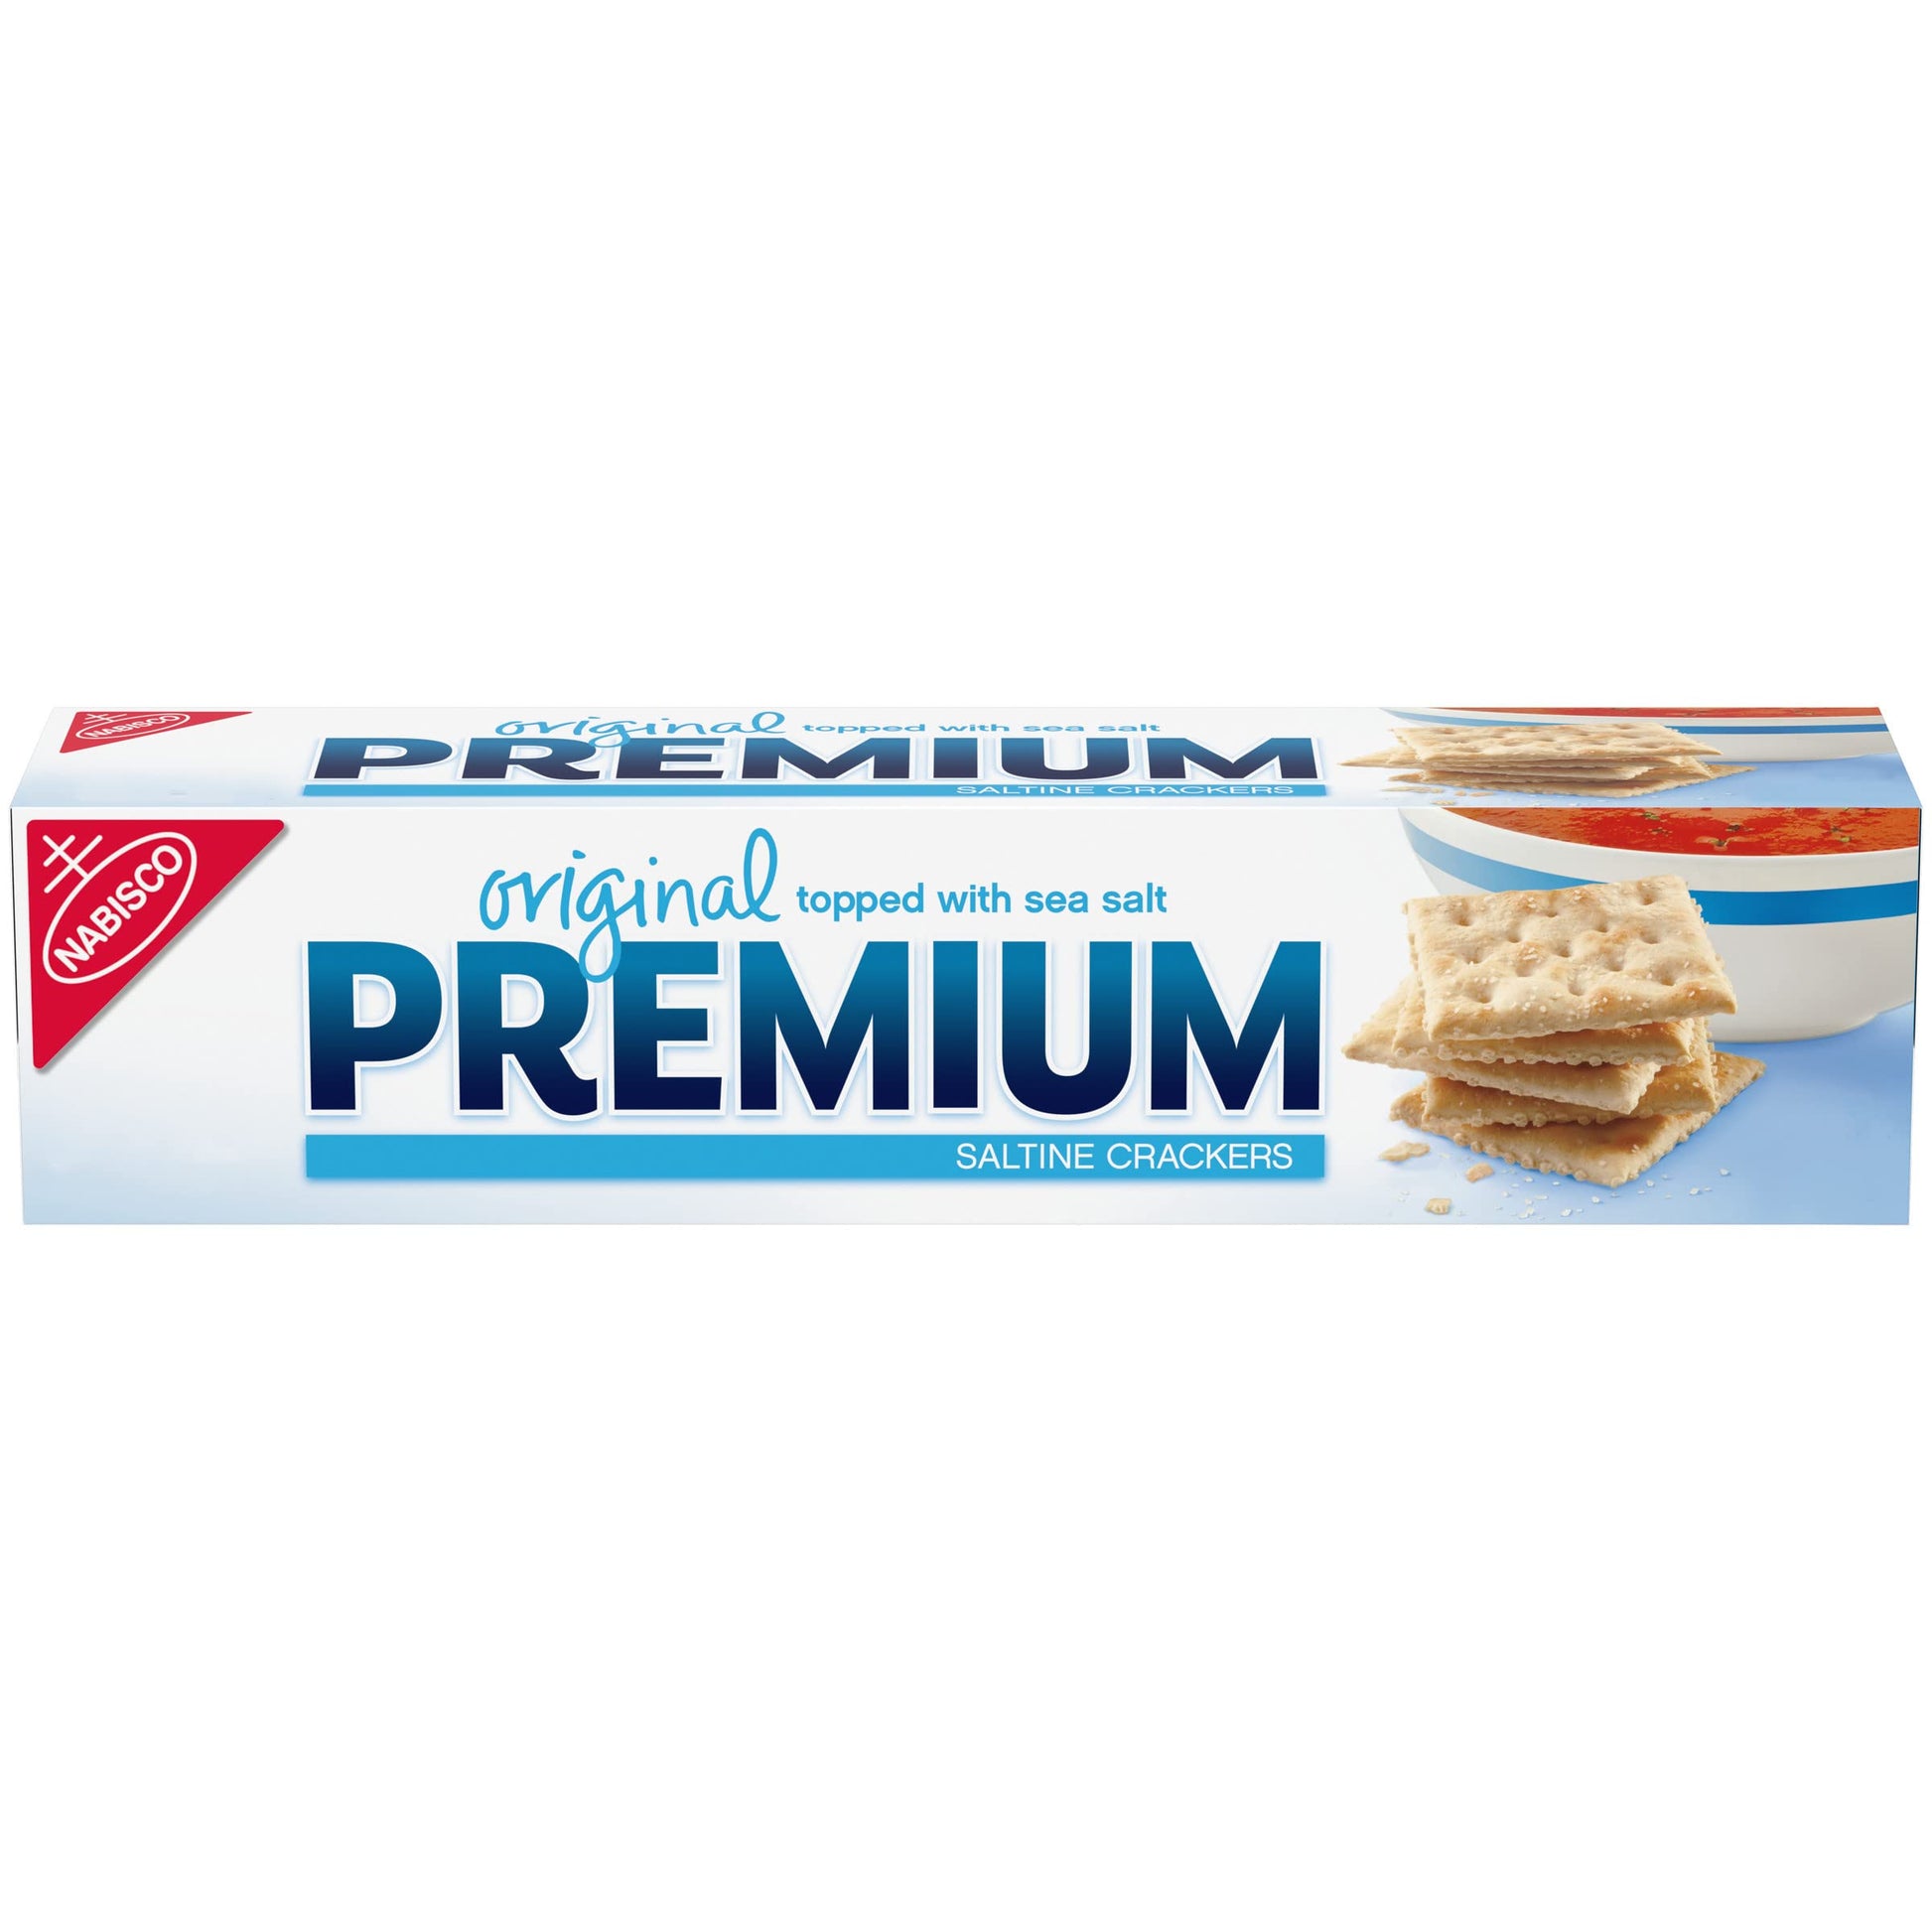 Nabisco Premium Saltine Crackers 4oz